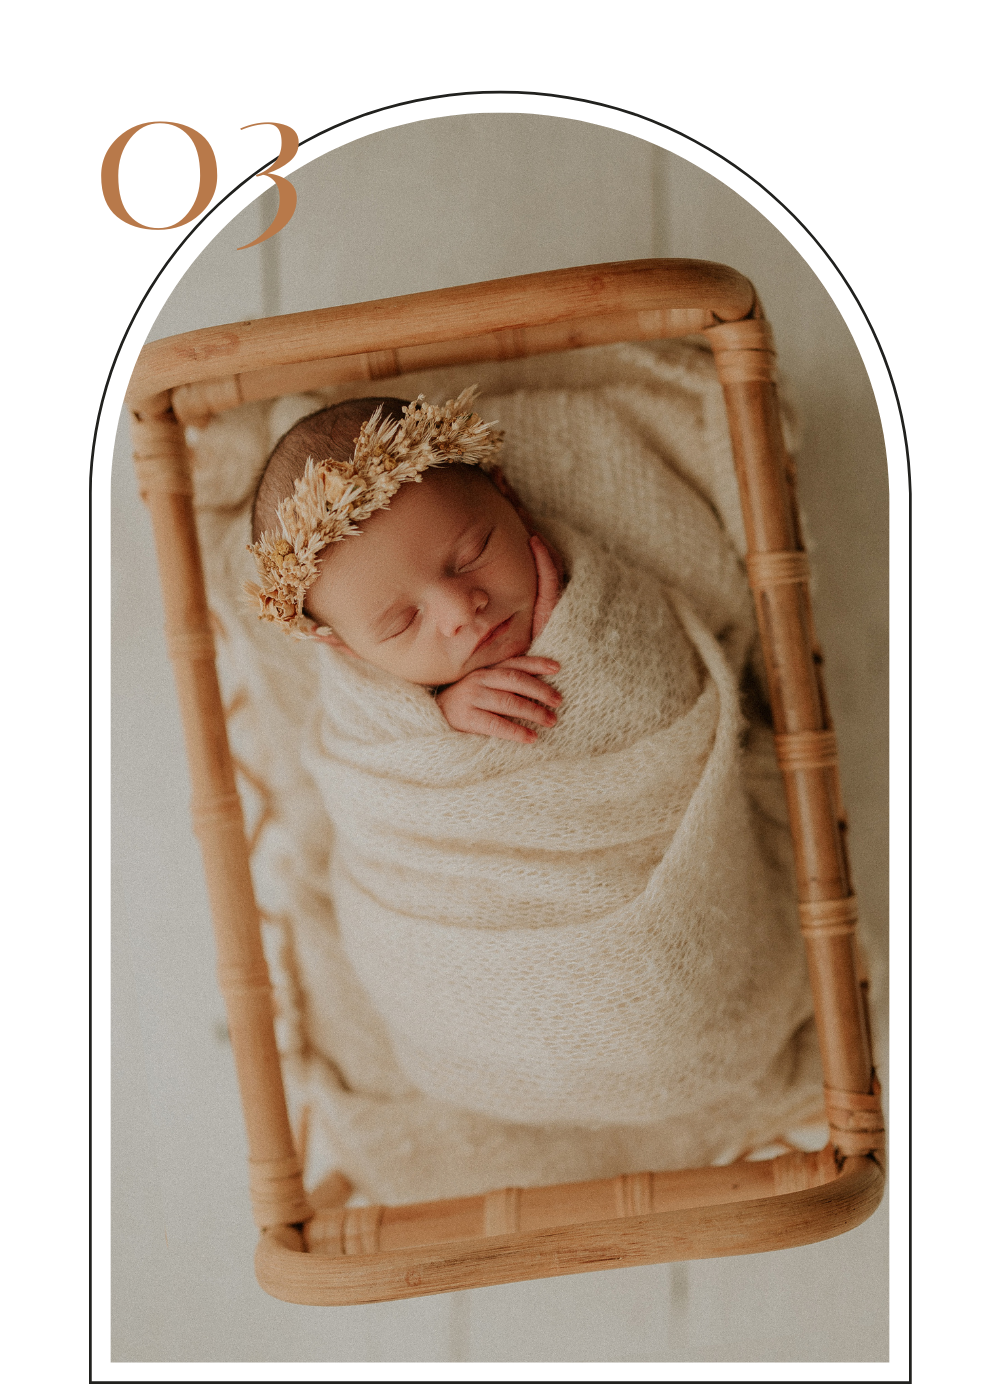 gallery of images of studio newborns